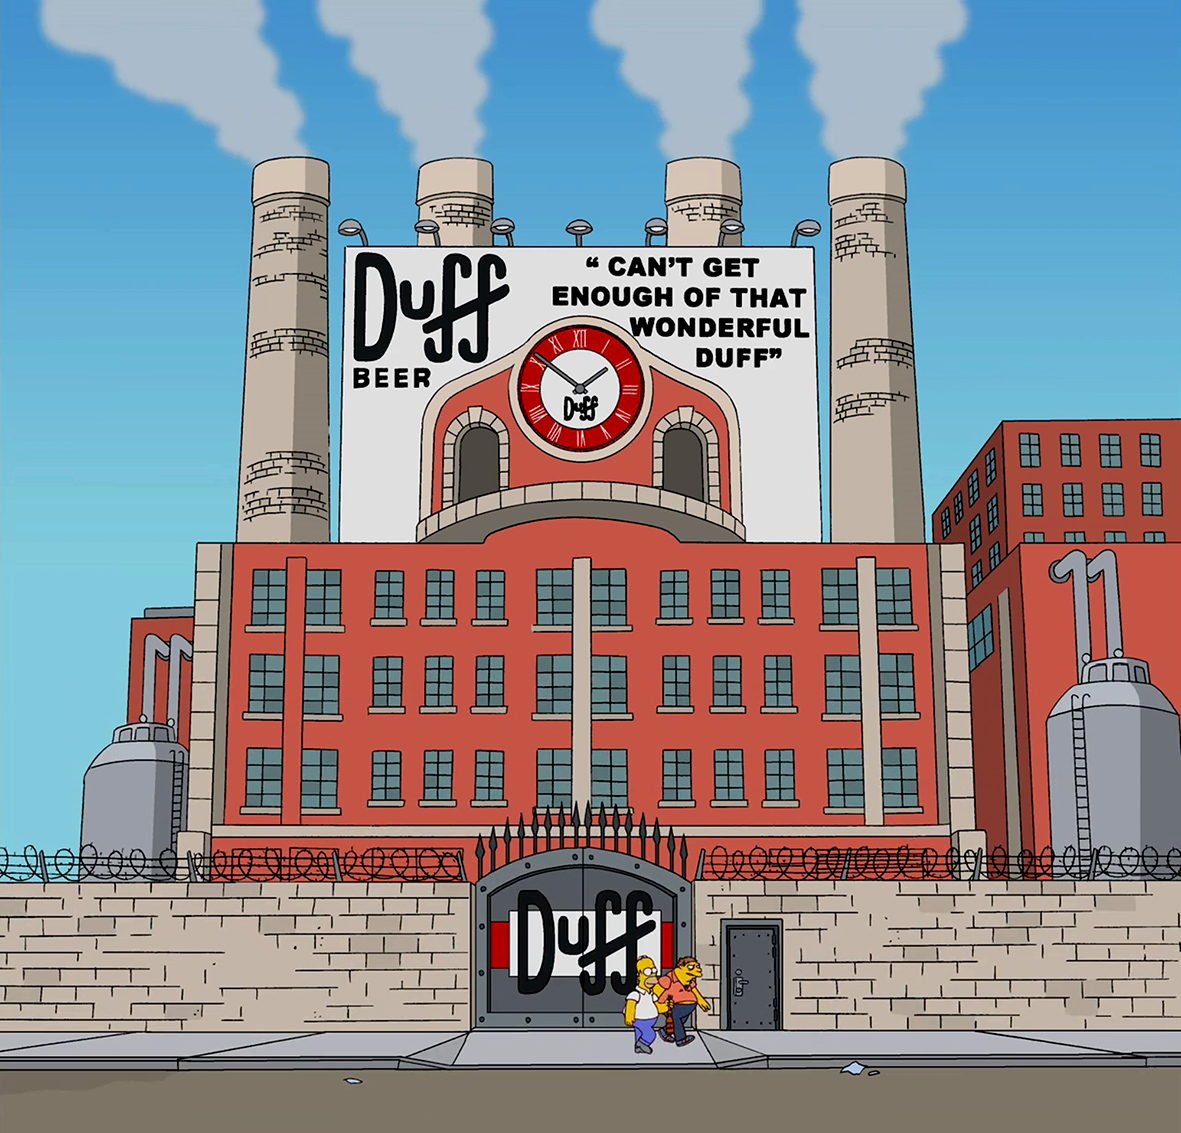 Duff brewery